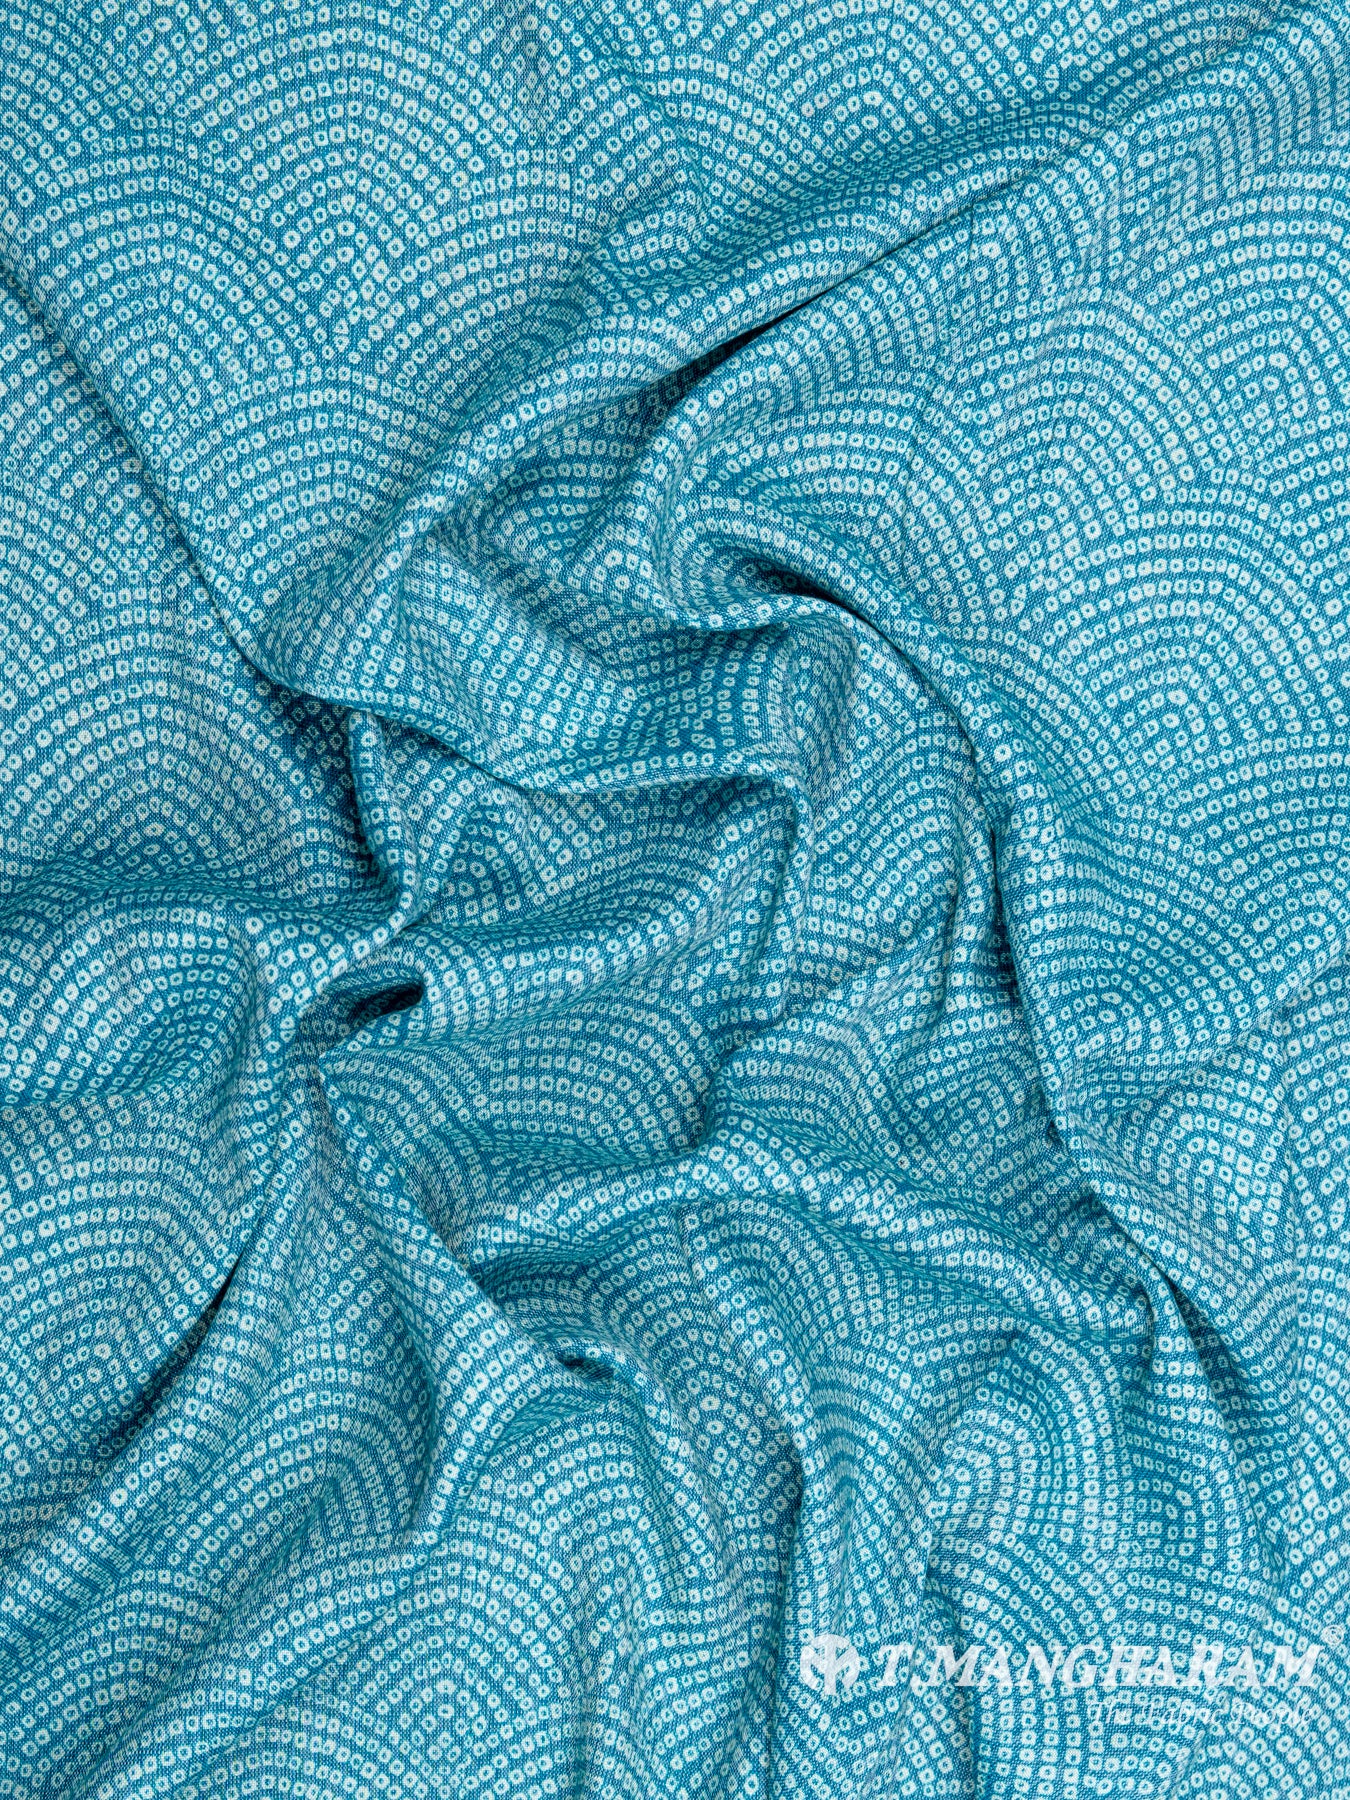 Blue Rayon Cotton Fabric - EC5355 view-4